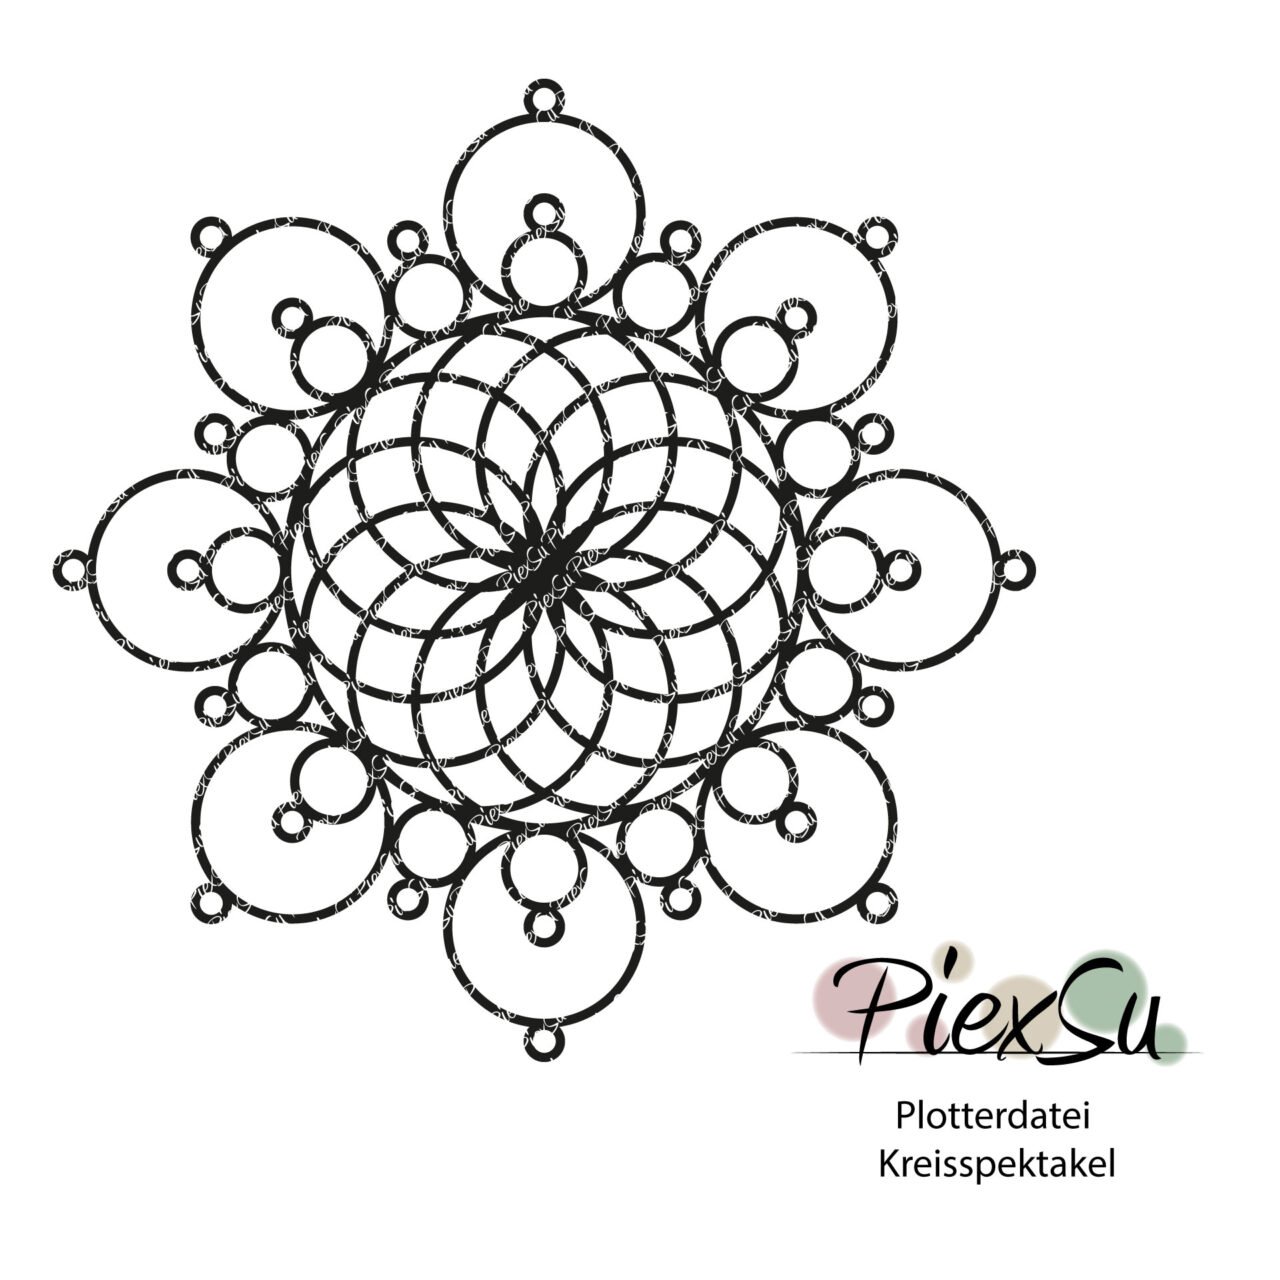 PiexSu-Plotterdatei-Kreisspektakel-plotten-dxf-svg-jpg-jpg-Titelbild